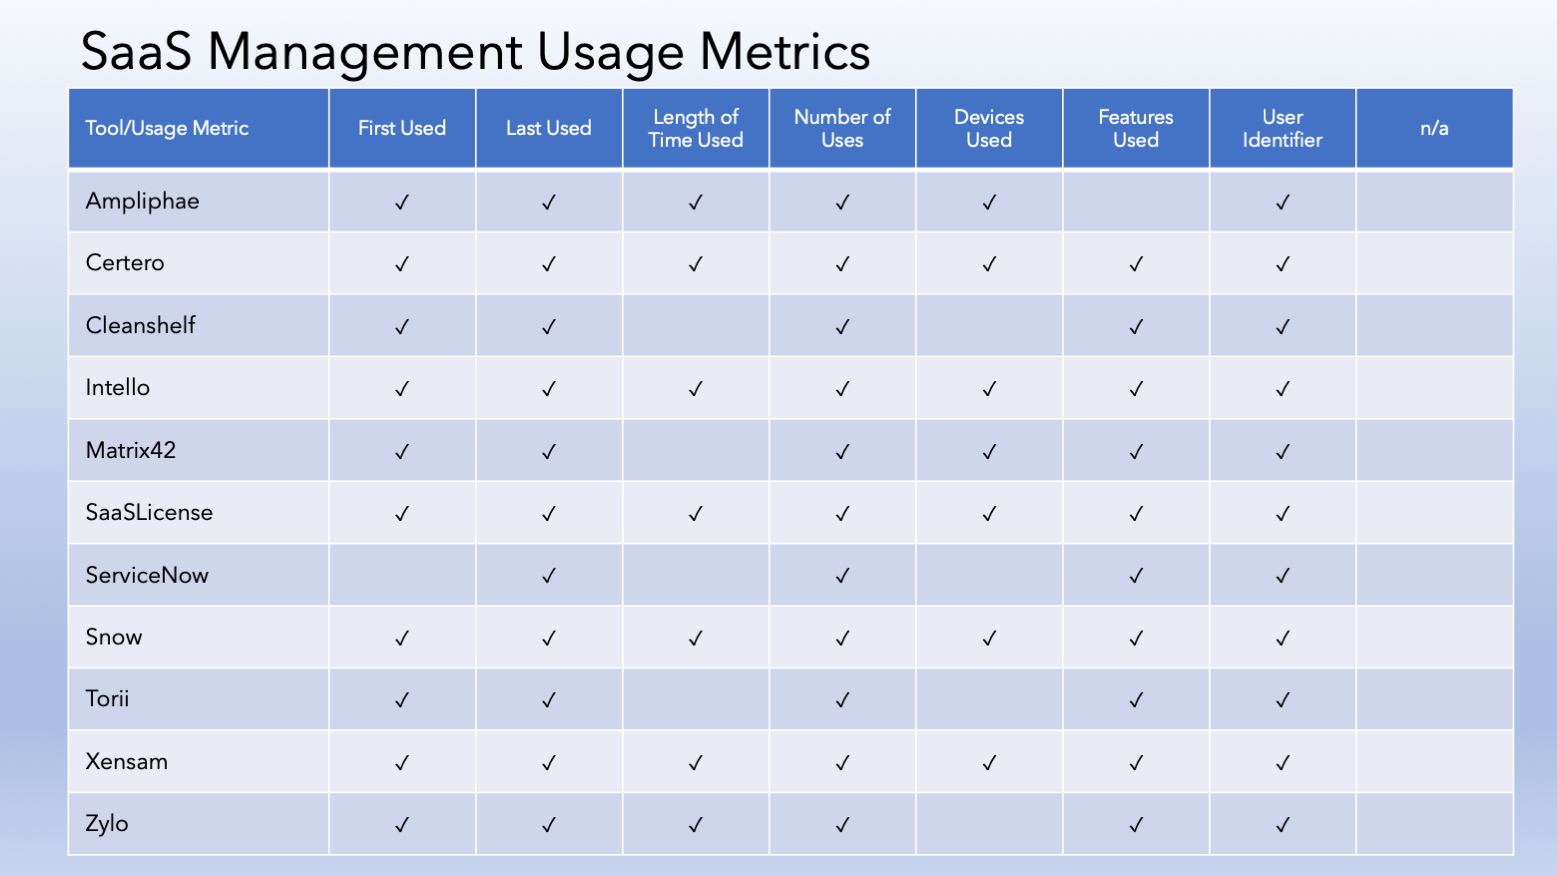 SaaS Management Usage Metrics by Vendor